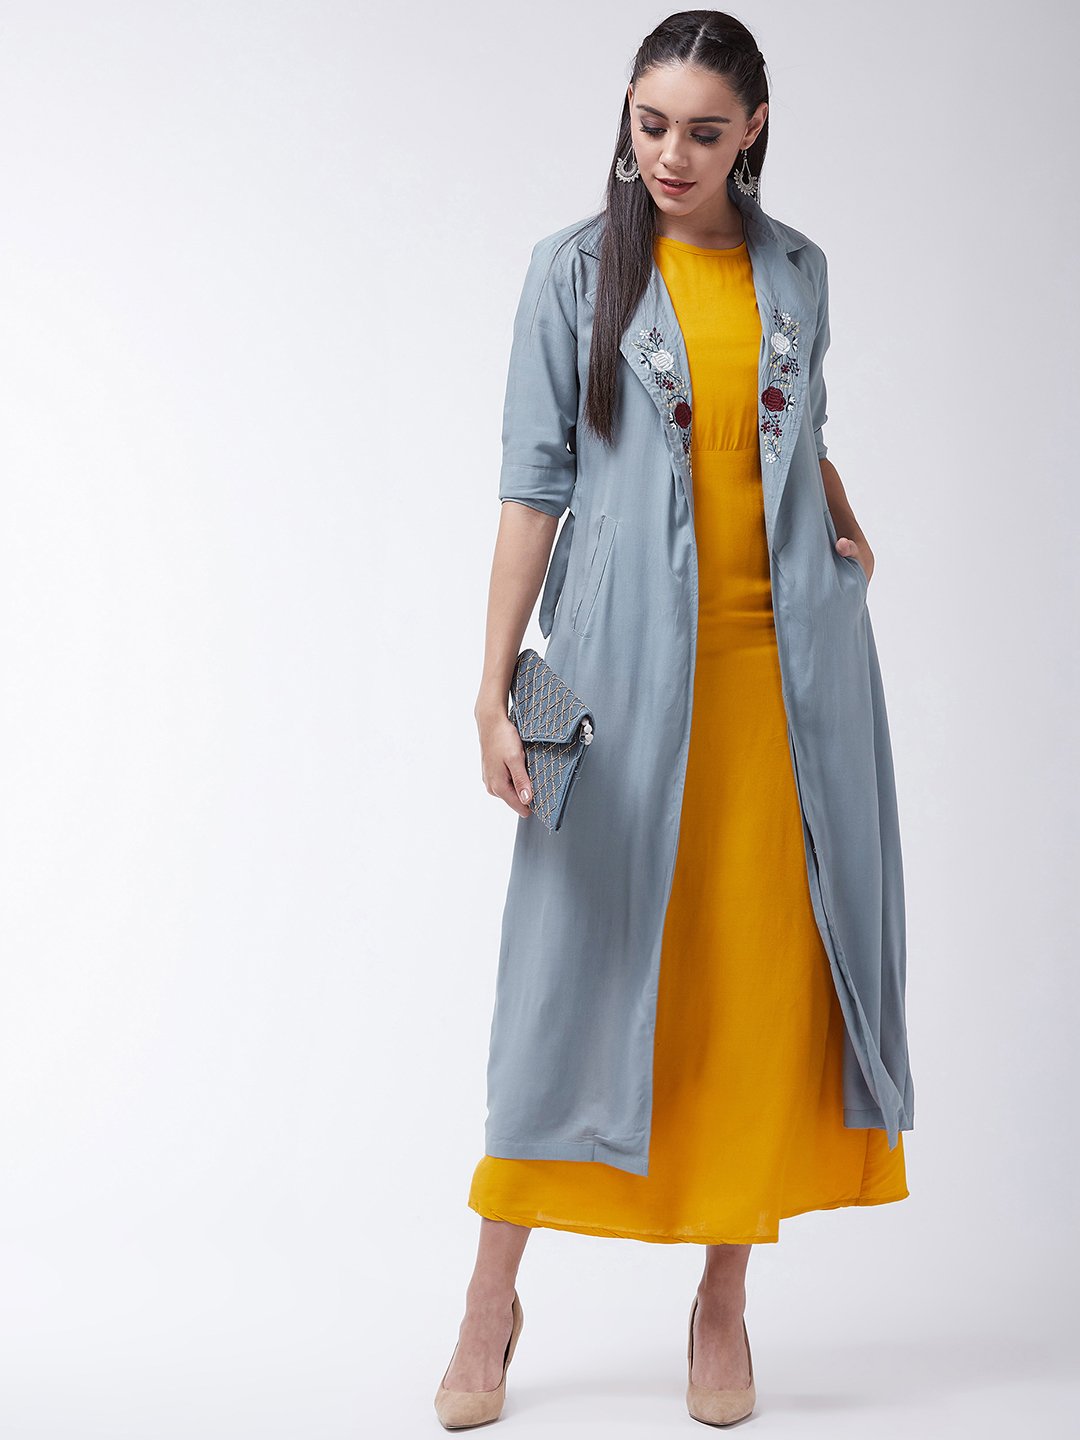 Mustard Dress With Grey Jacket